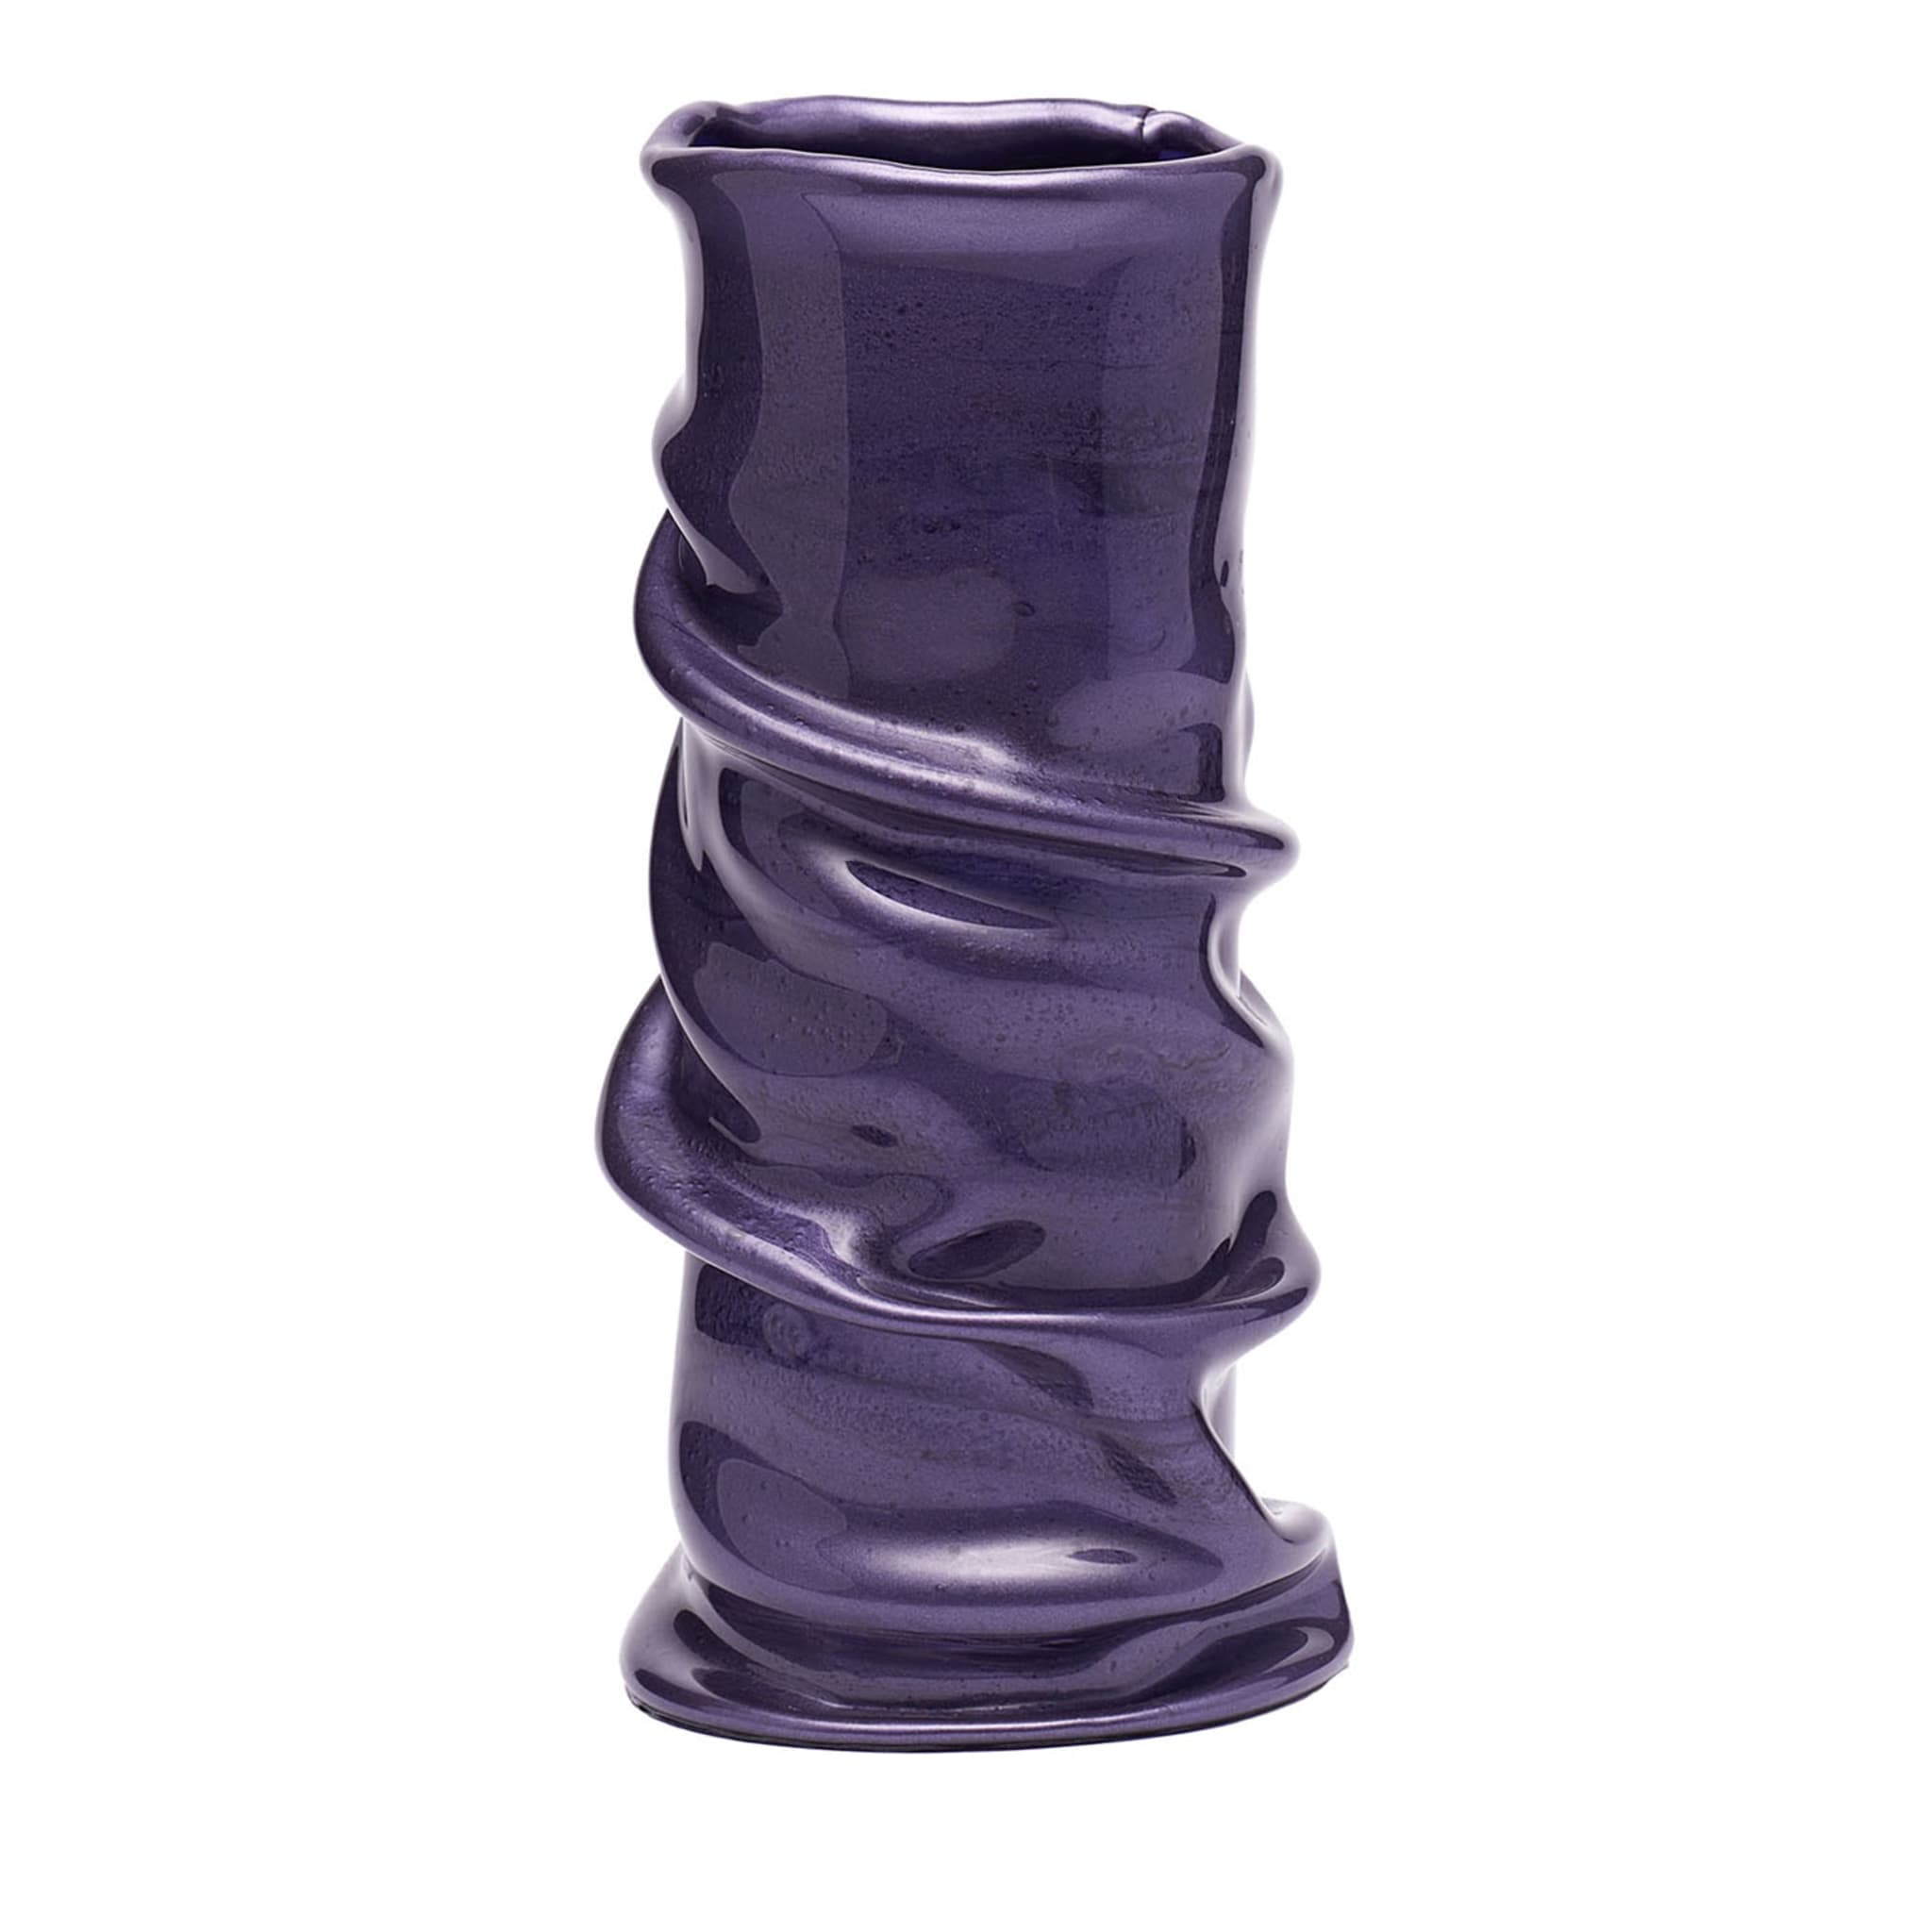 Venere Small Purple Vase - Main view